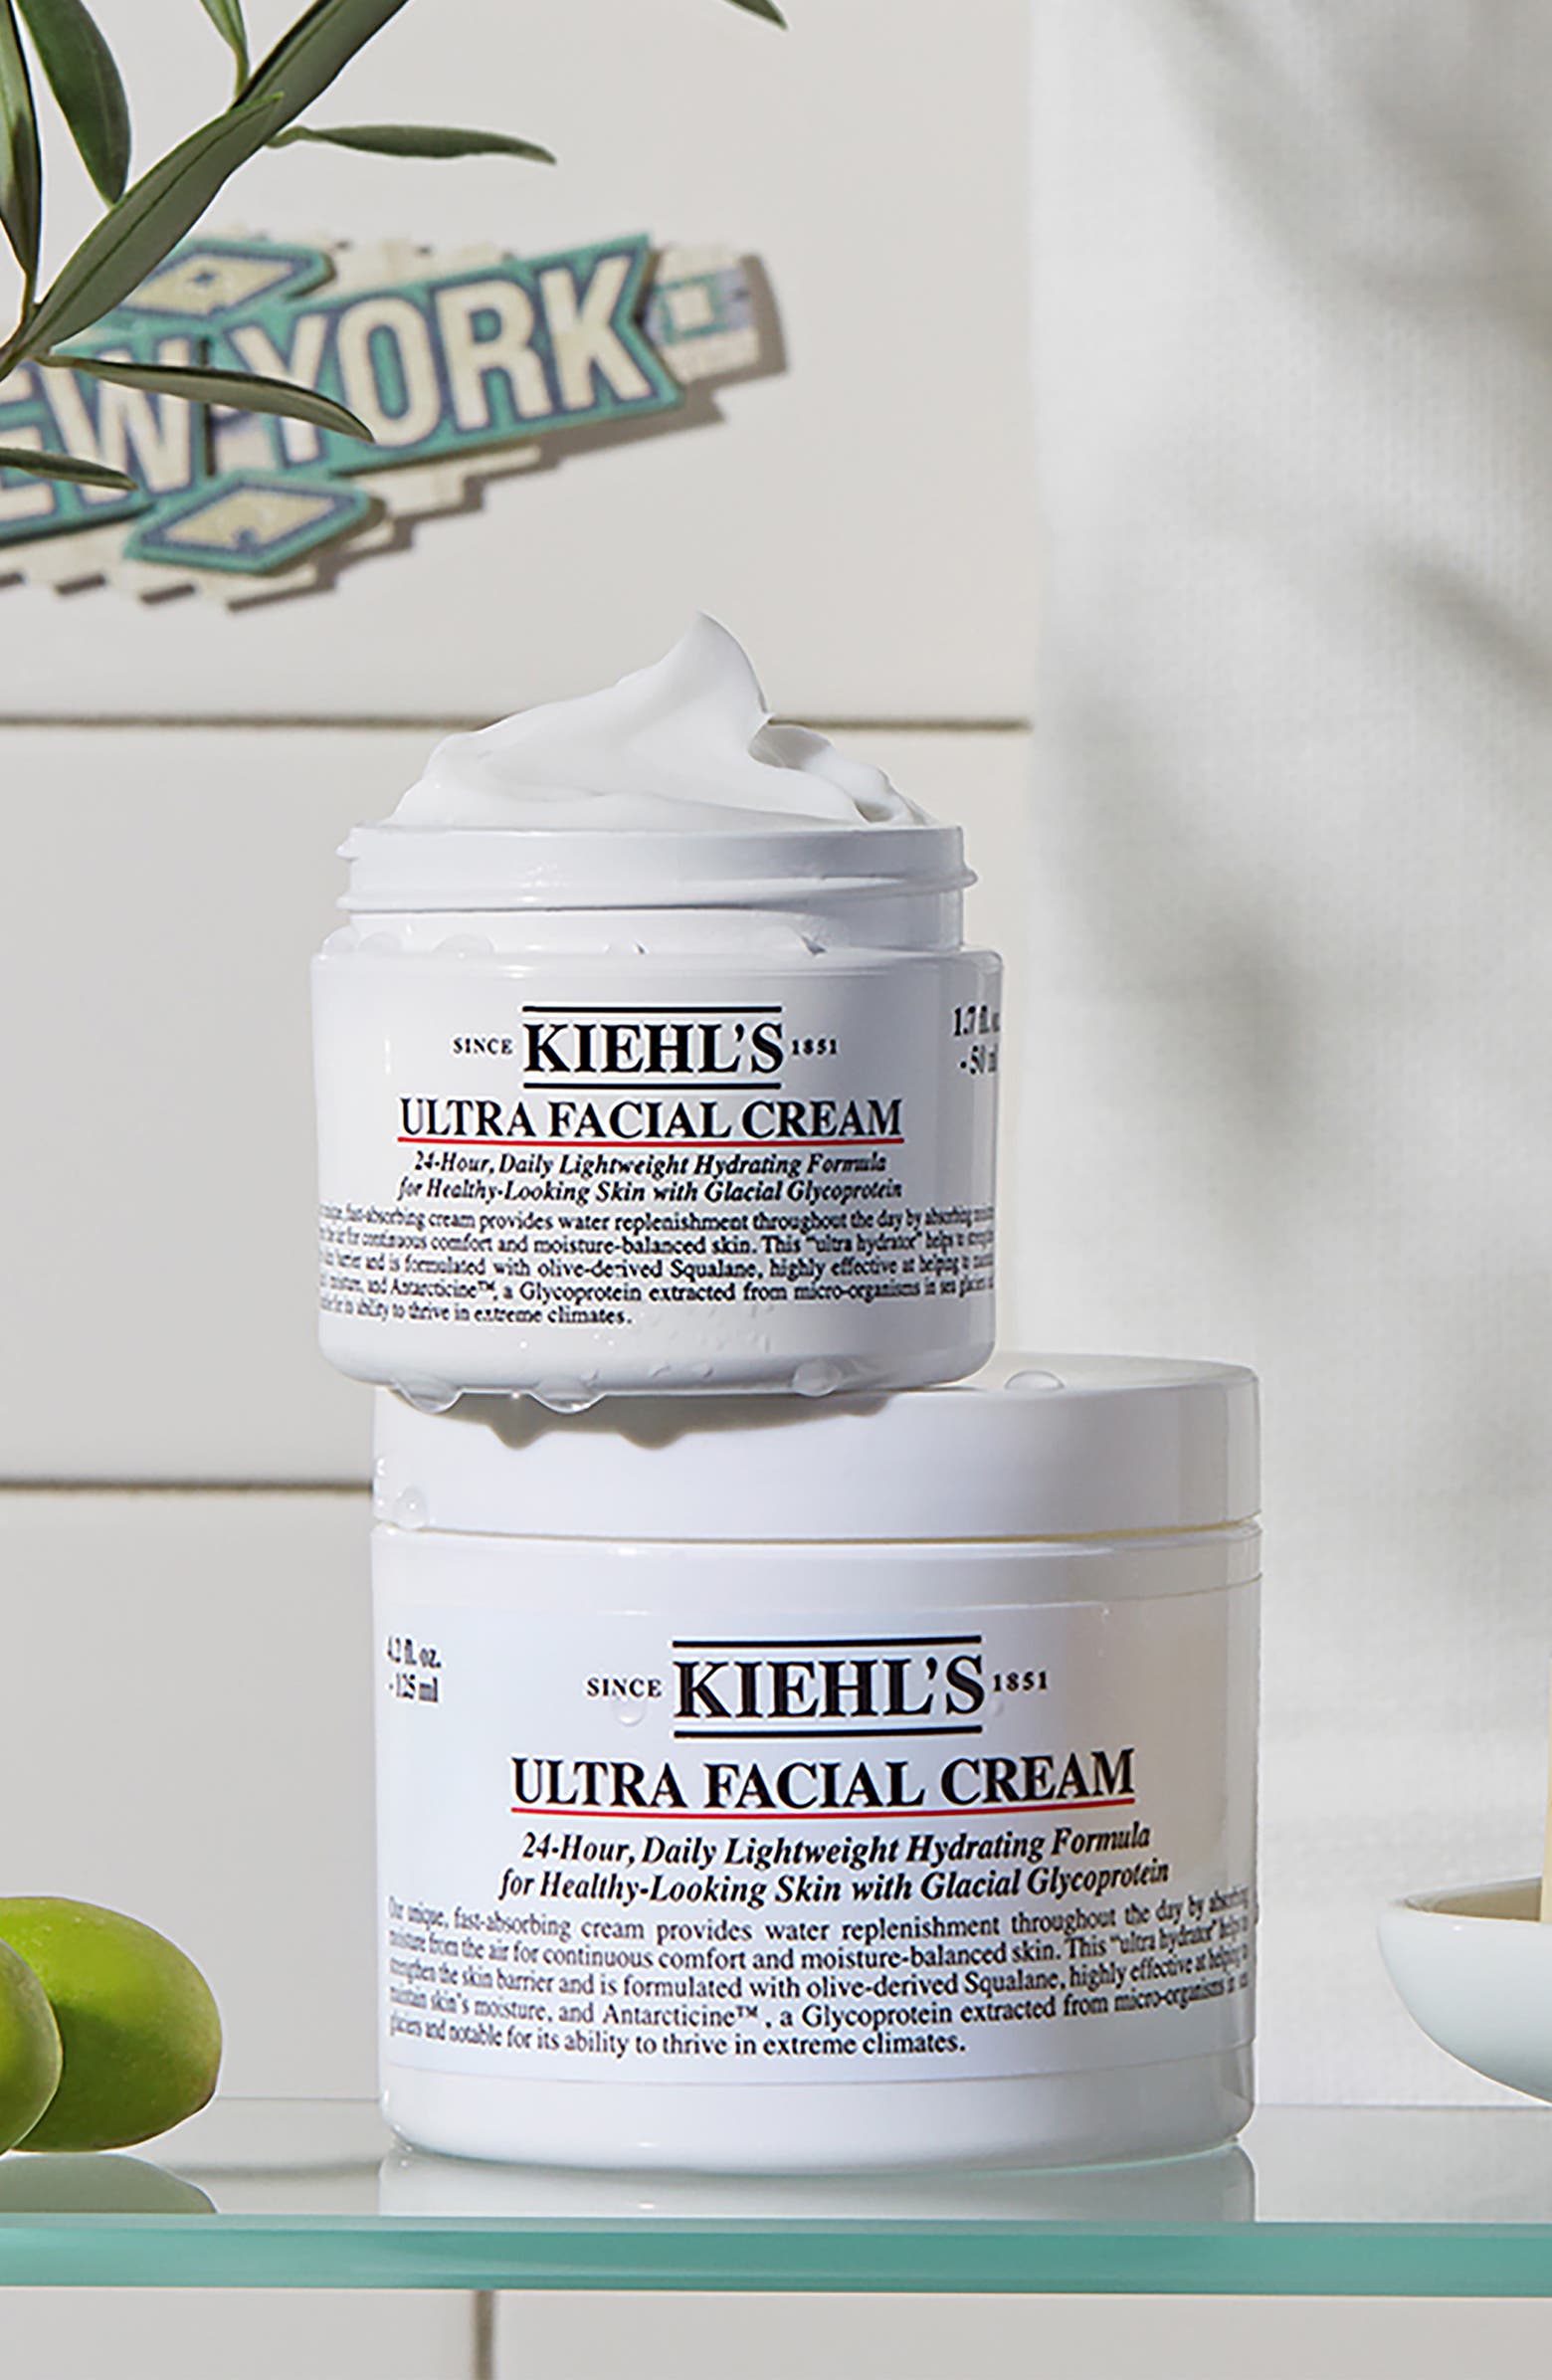 KIEHL'S Ultra Facial Cream